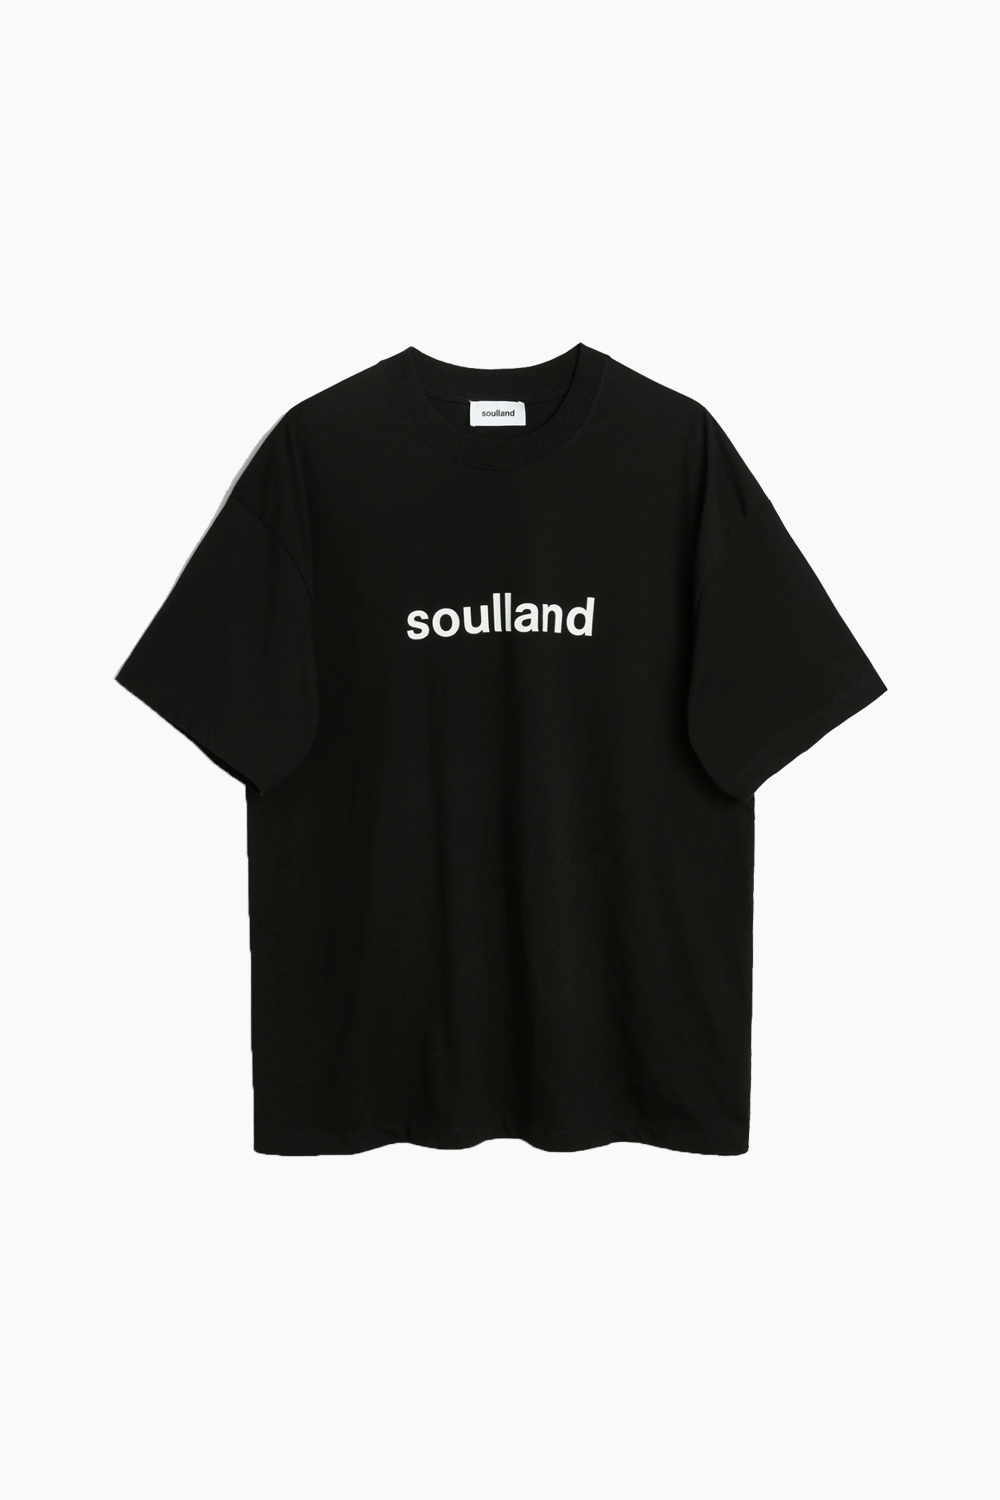 Se Ocean T-shirt - Black - Soulland - Sort XXS/XS hos QNTS.dk